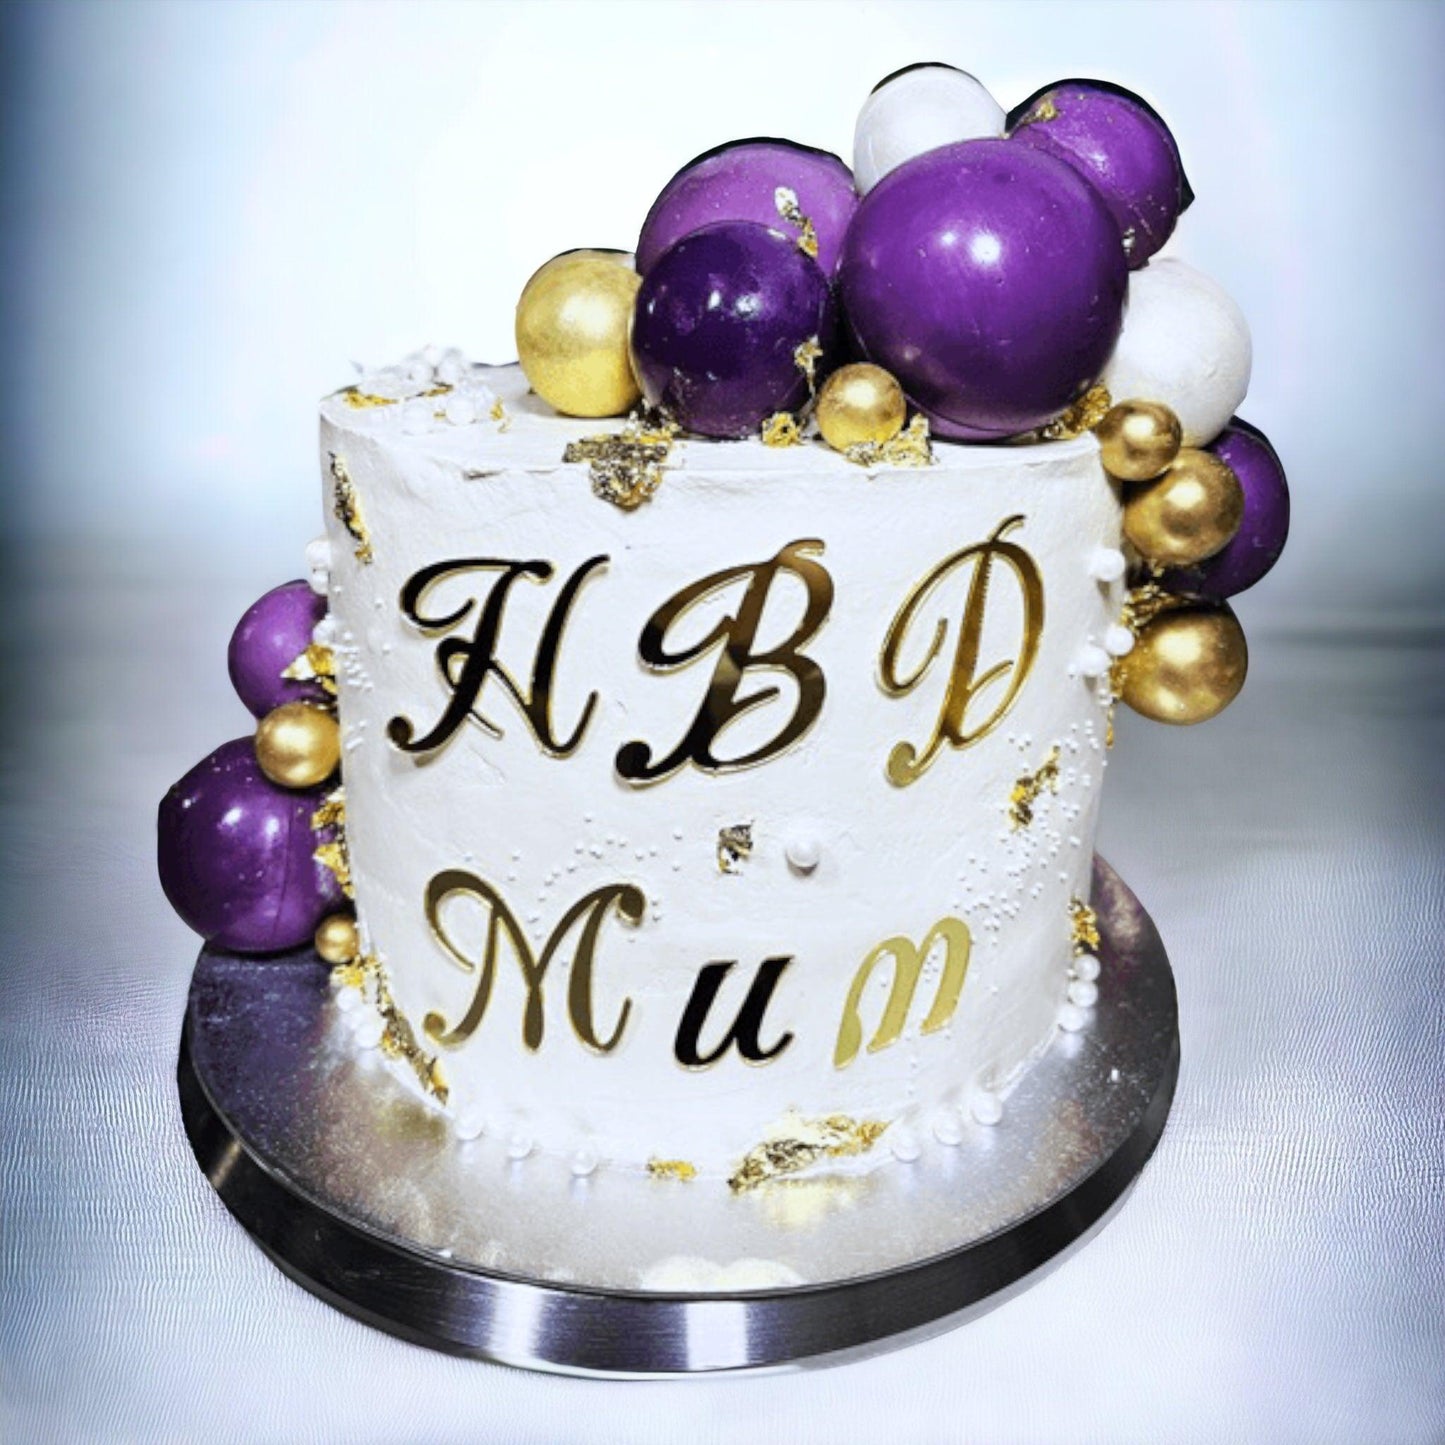 vanilia birthday cake with chocolate balls - Naturally_deliciousss